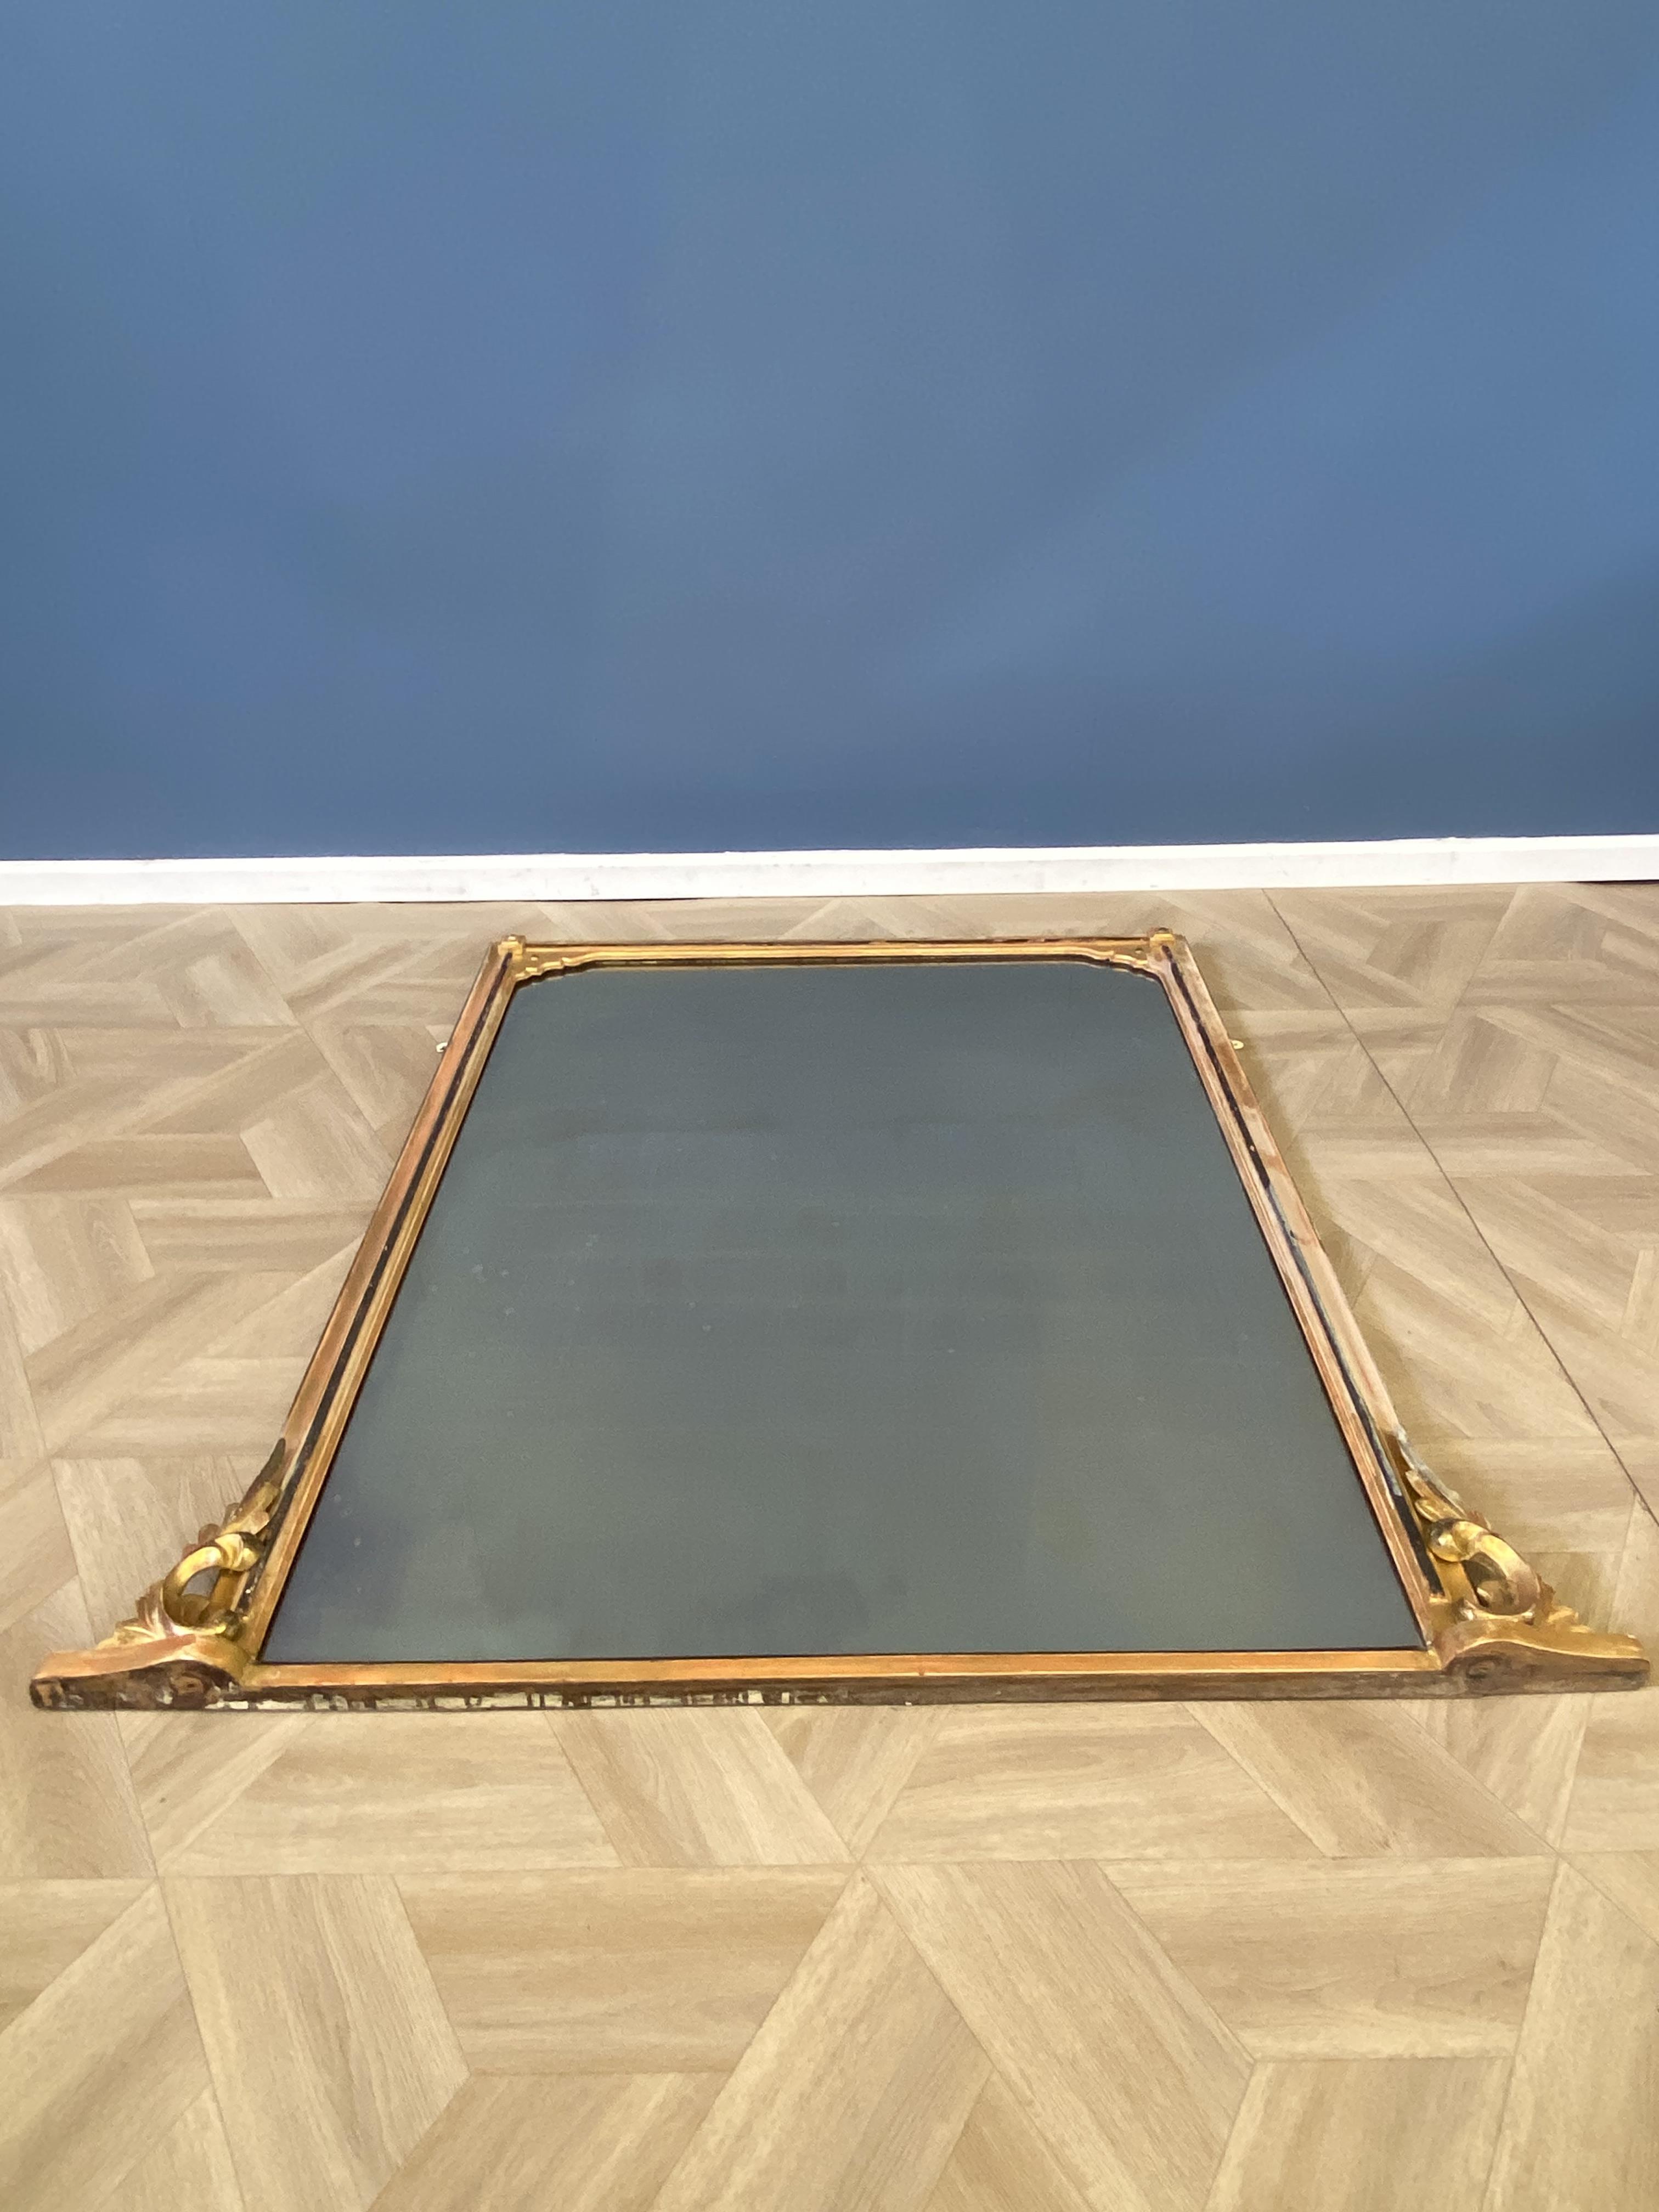 Victorian gilded rectangular overmantle mirror - Image 7 of 8